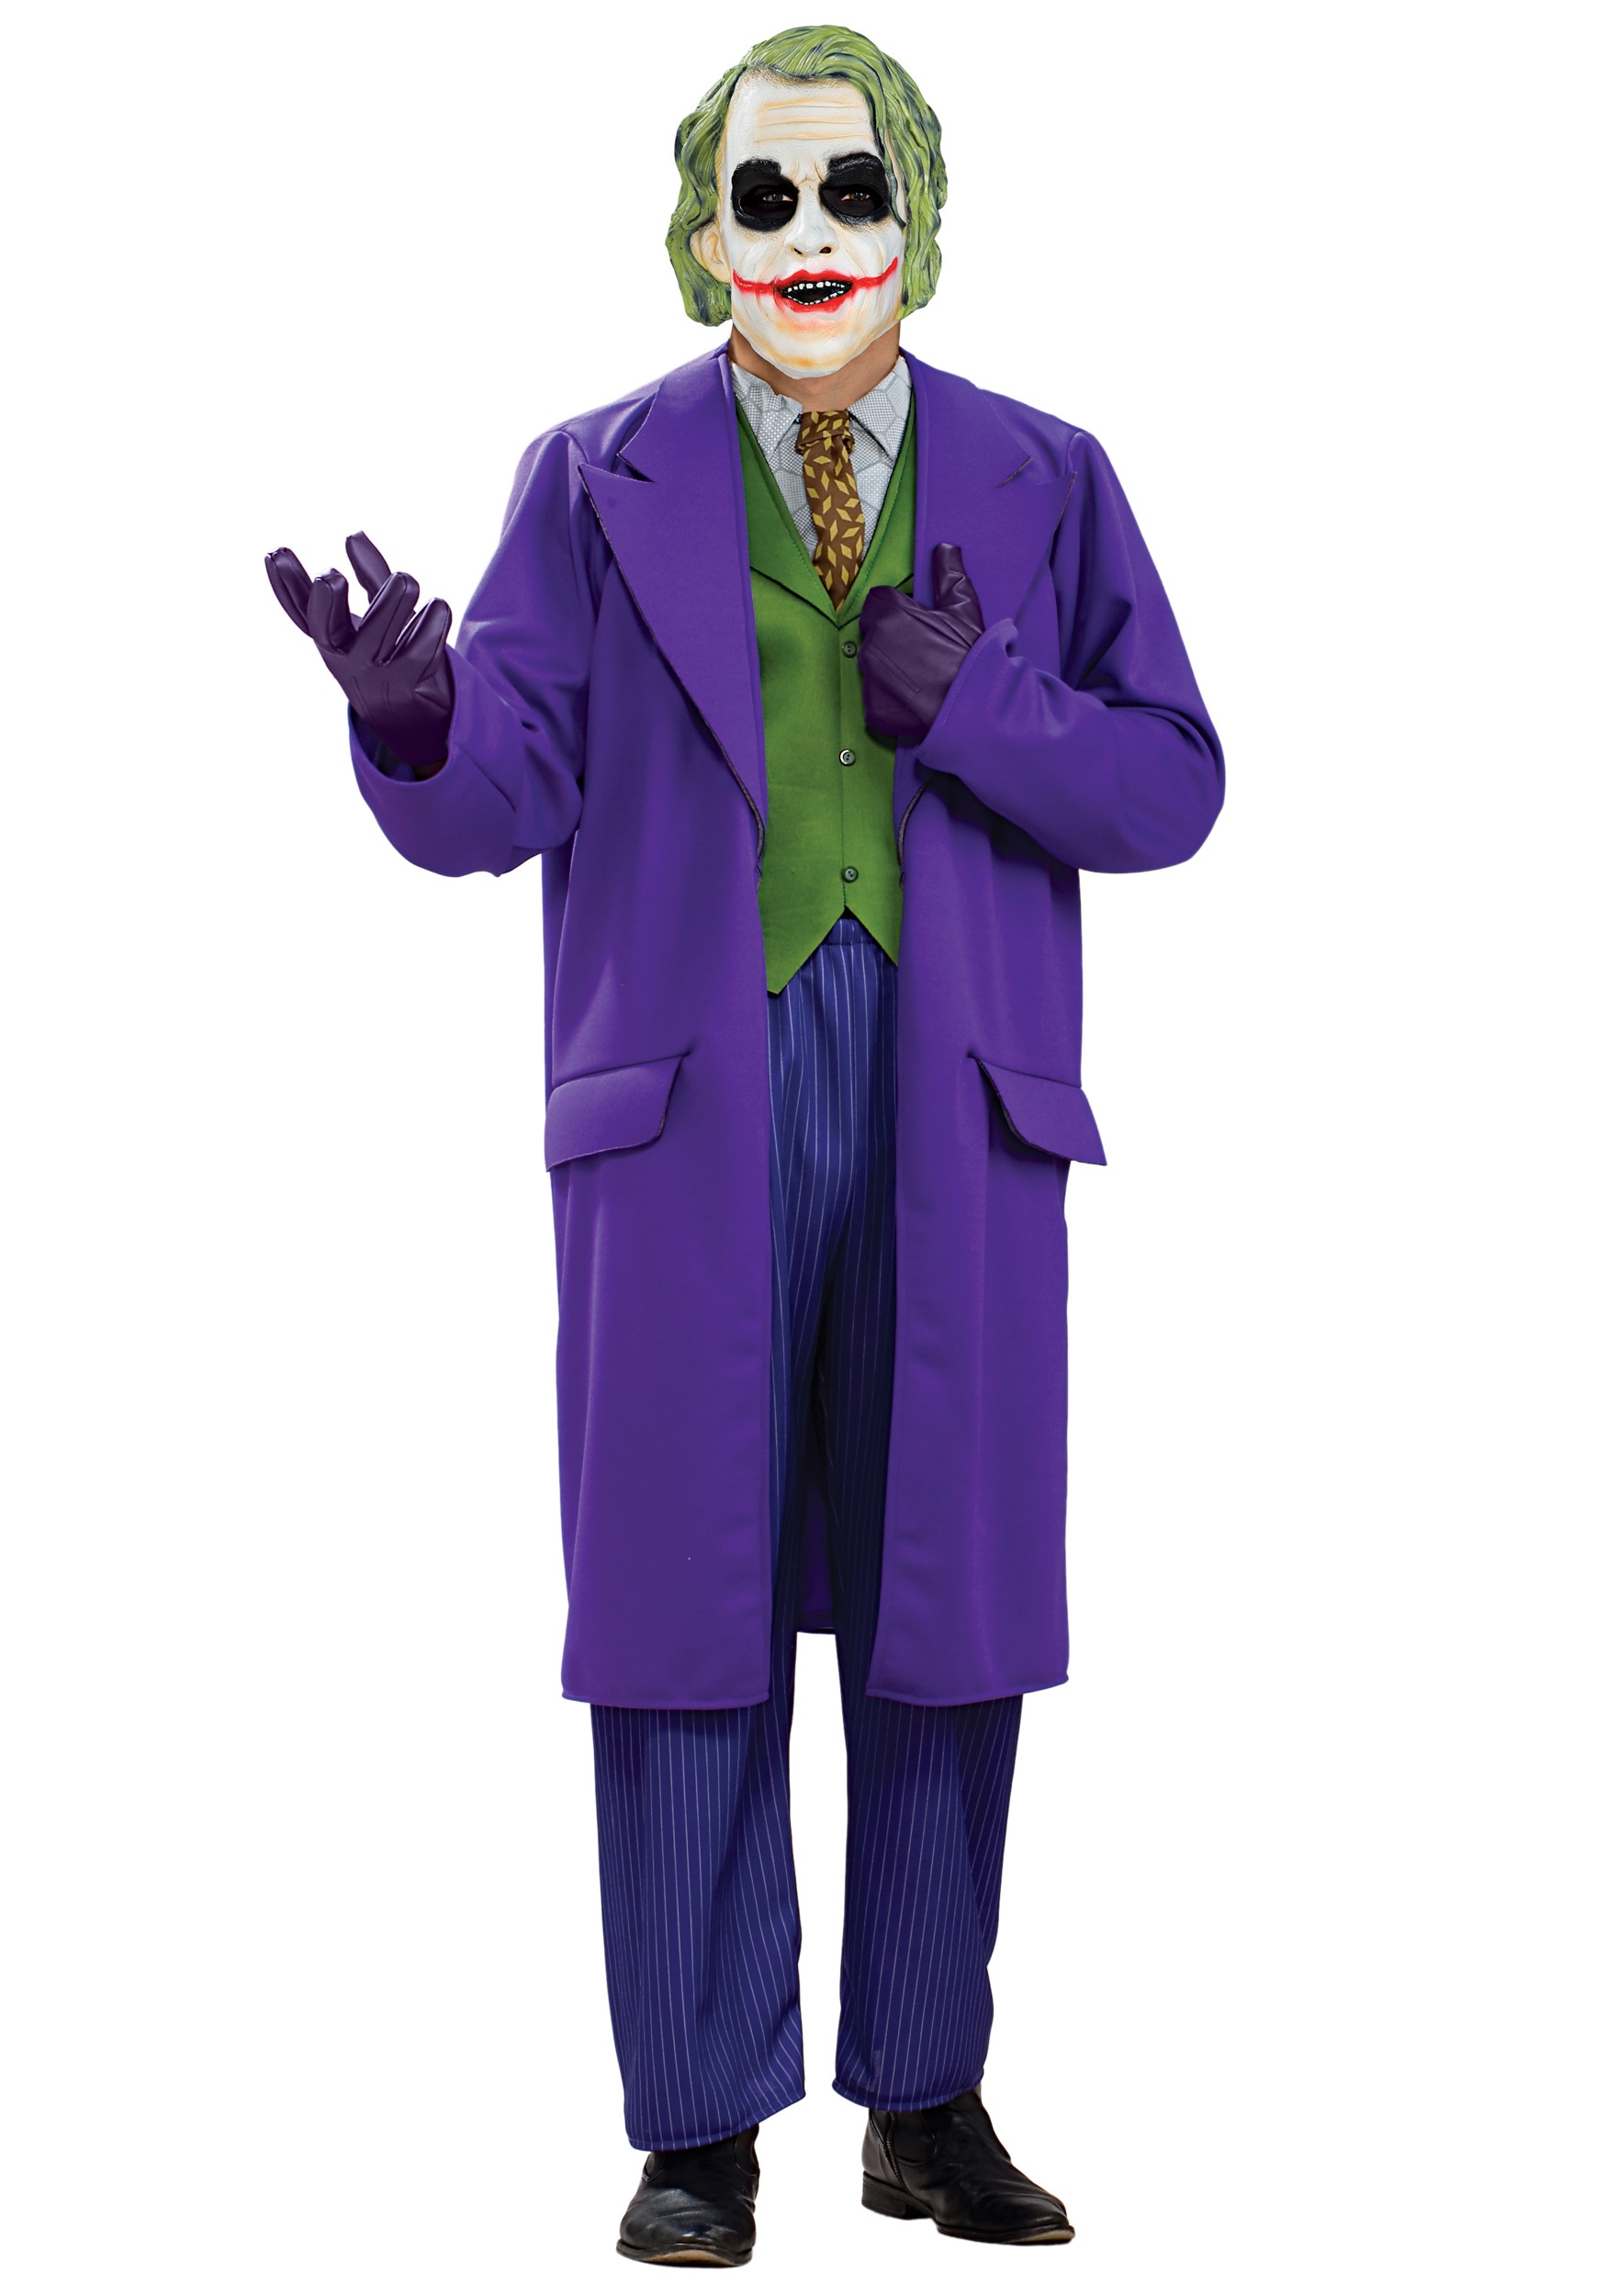 Home &gt;&gt; Joker Costume &gt;&gt; The Joker Costume Deluxe with Mask, Plus Size 